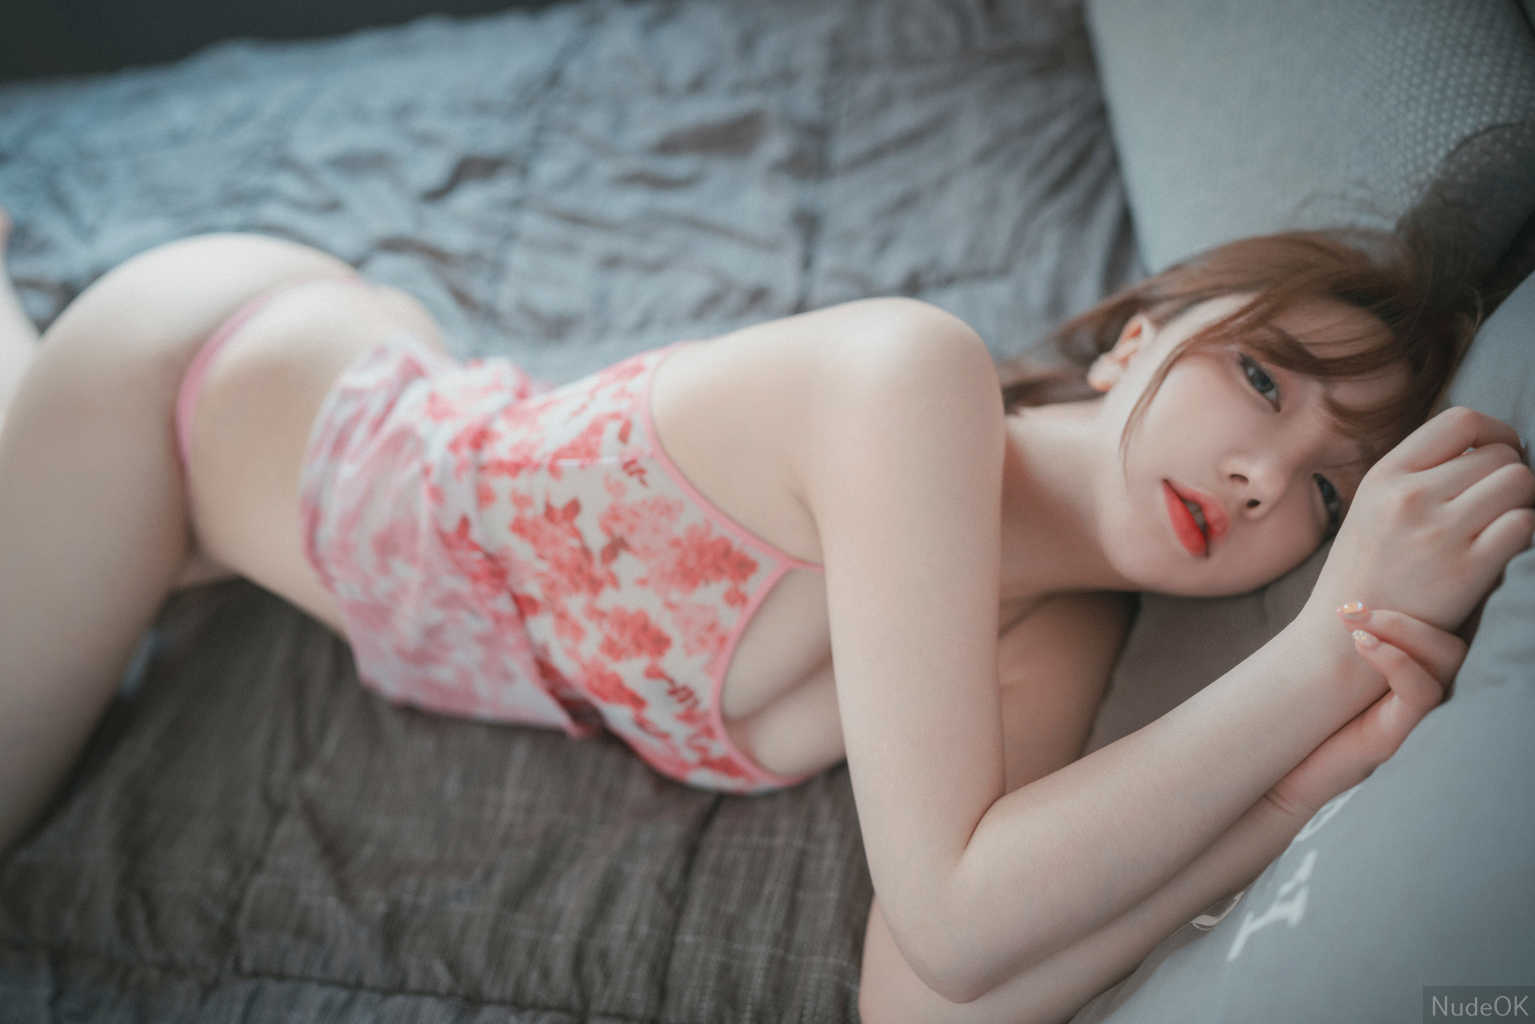 Son Ye Eun Model Korea Naked NudeOK.Com